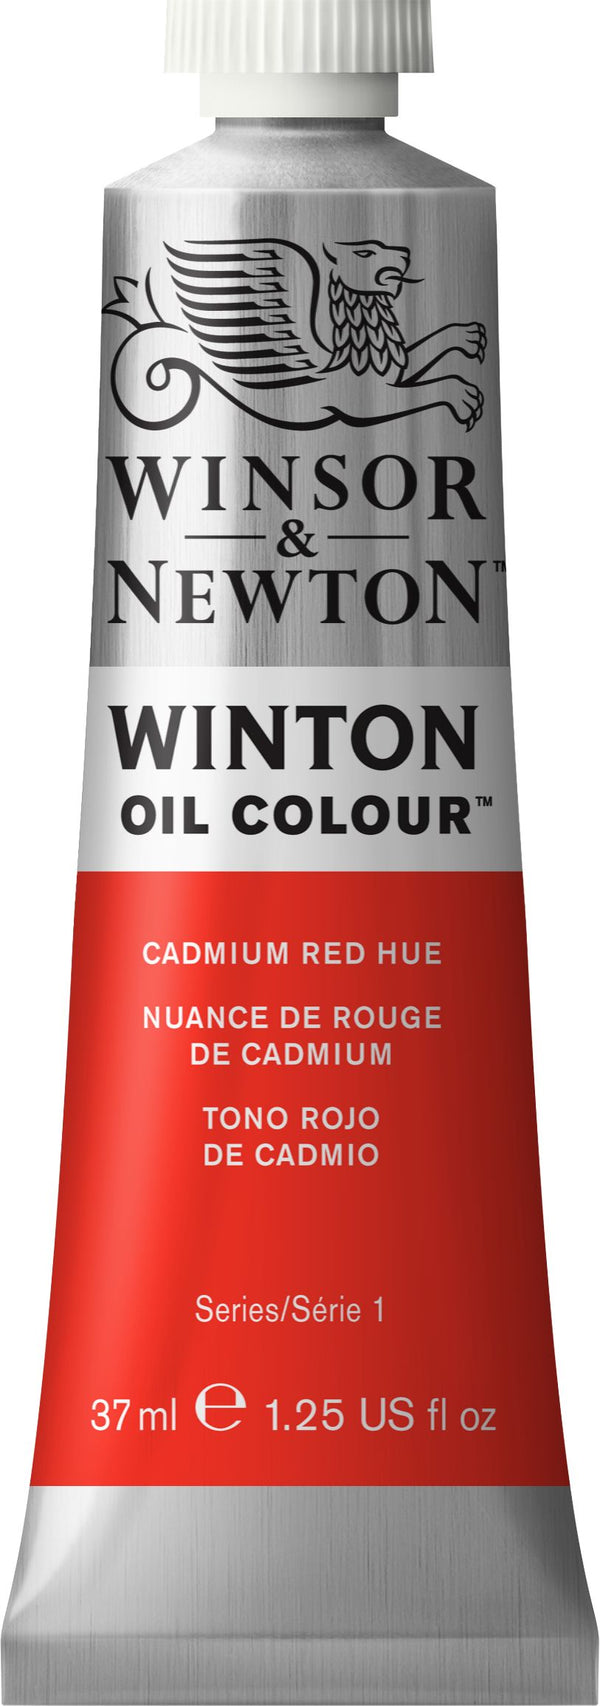 Winton Oil Colour Cadmium Red Hue - 37ml tube